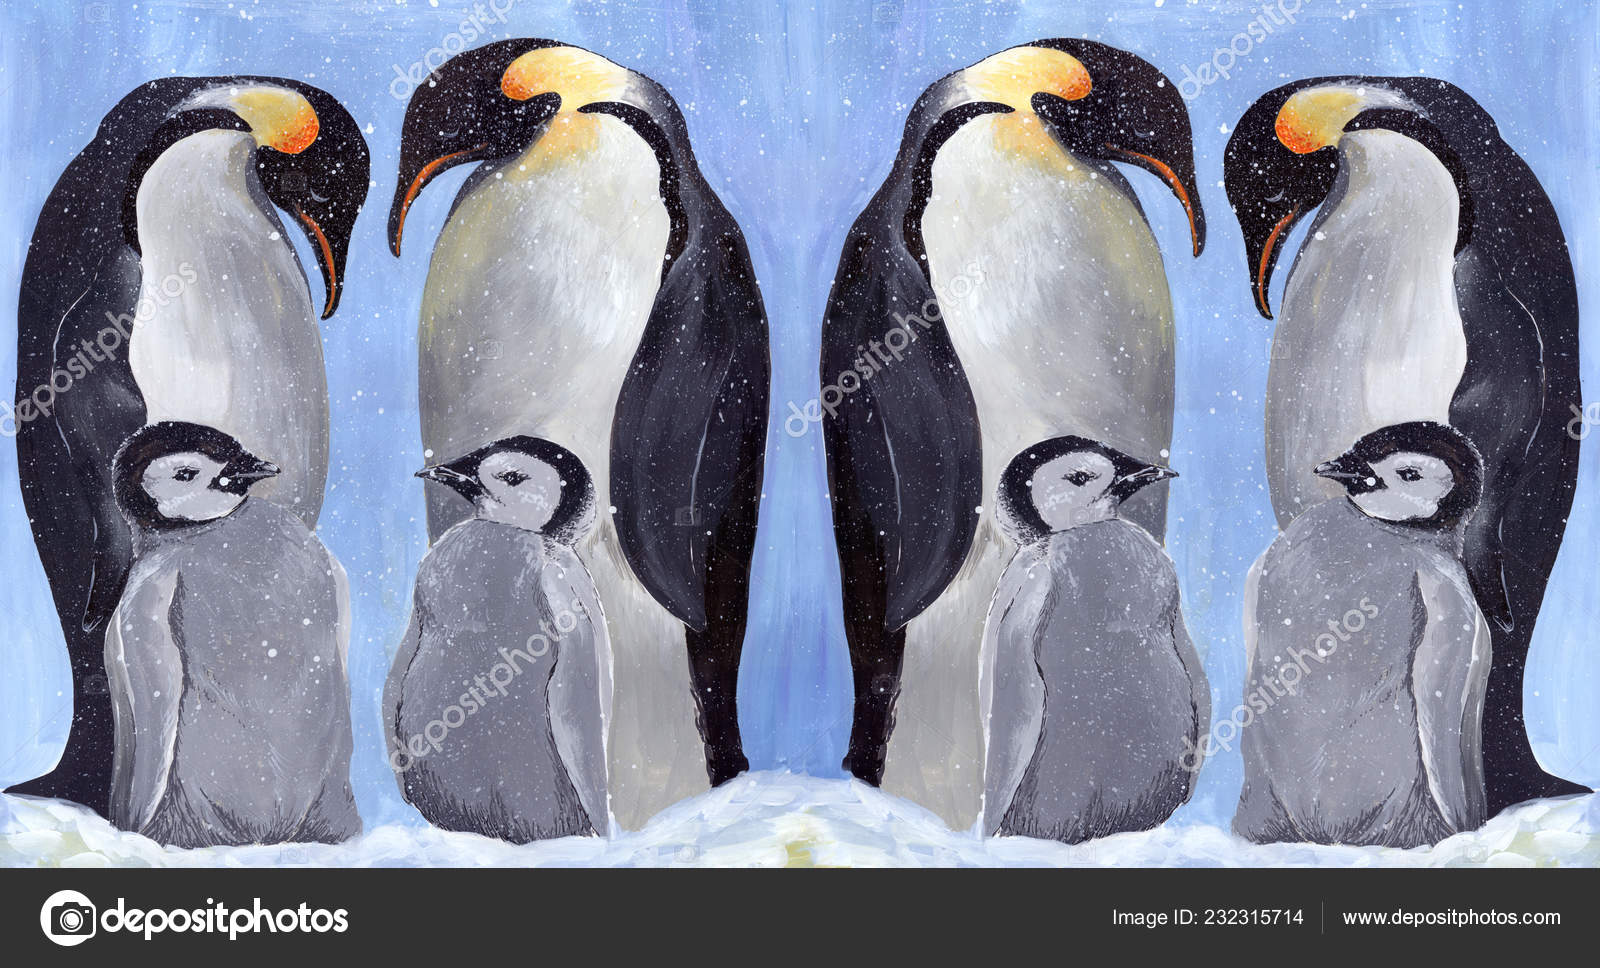 penguin Königspinguin mit Küken Antarktis Postkarte